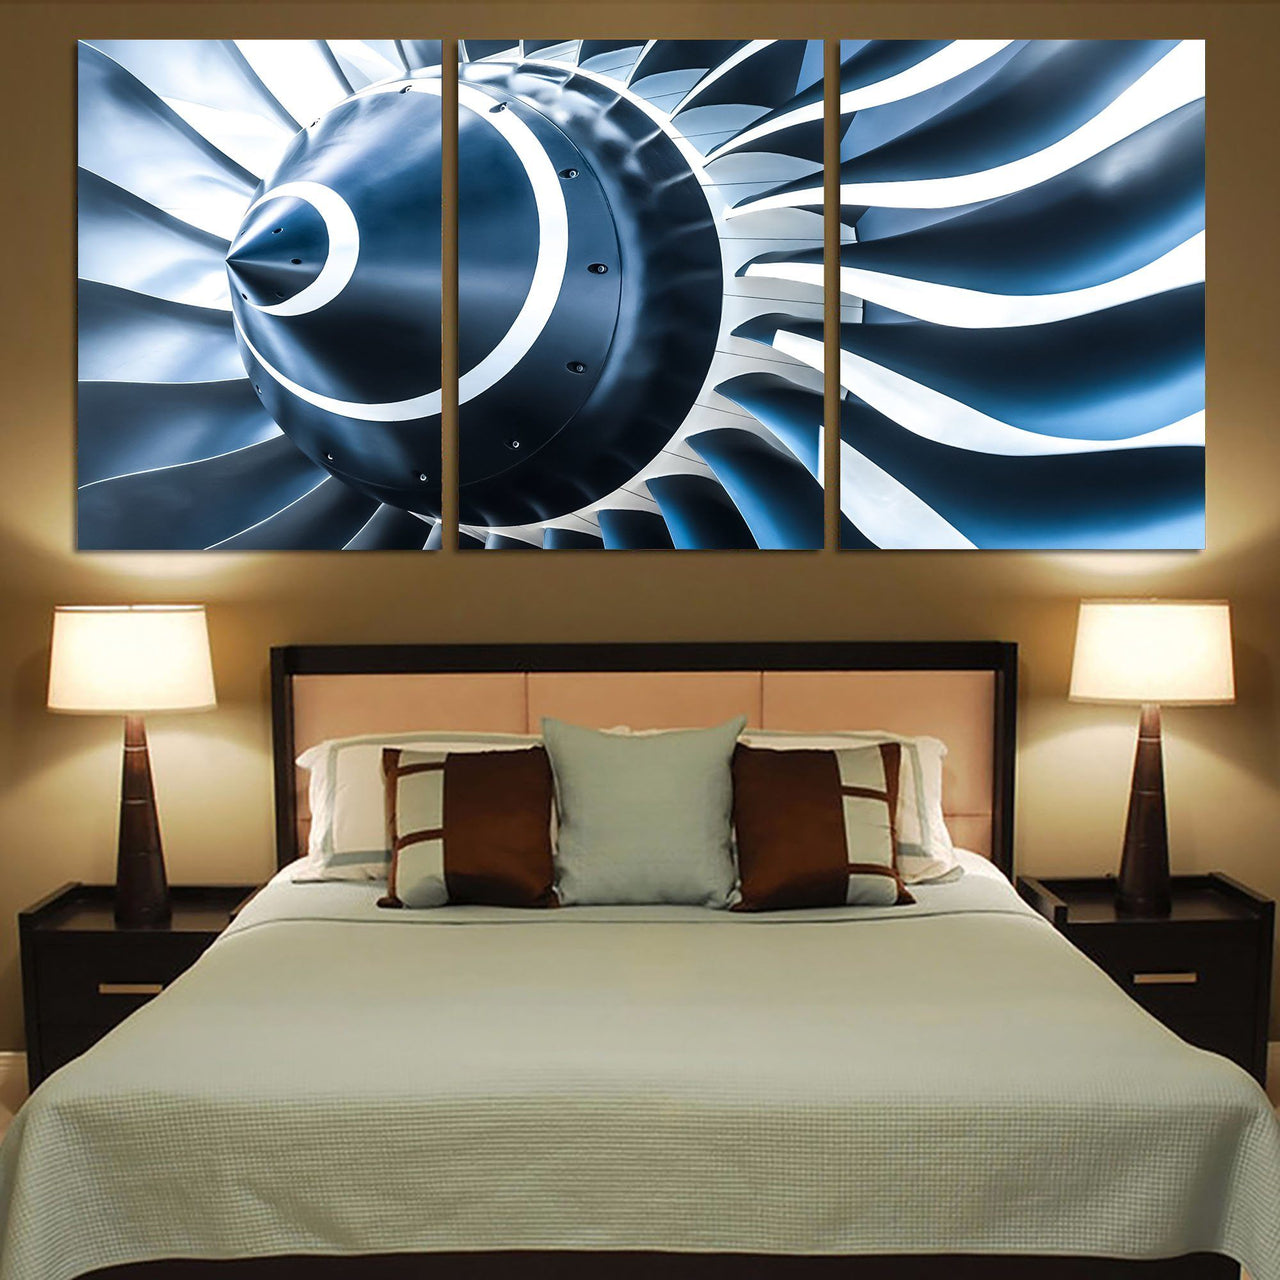 Blue Toned Super Jet Engine Blades Closeup Printed Canvas Posters (3 Pieces) Aviation Shop 